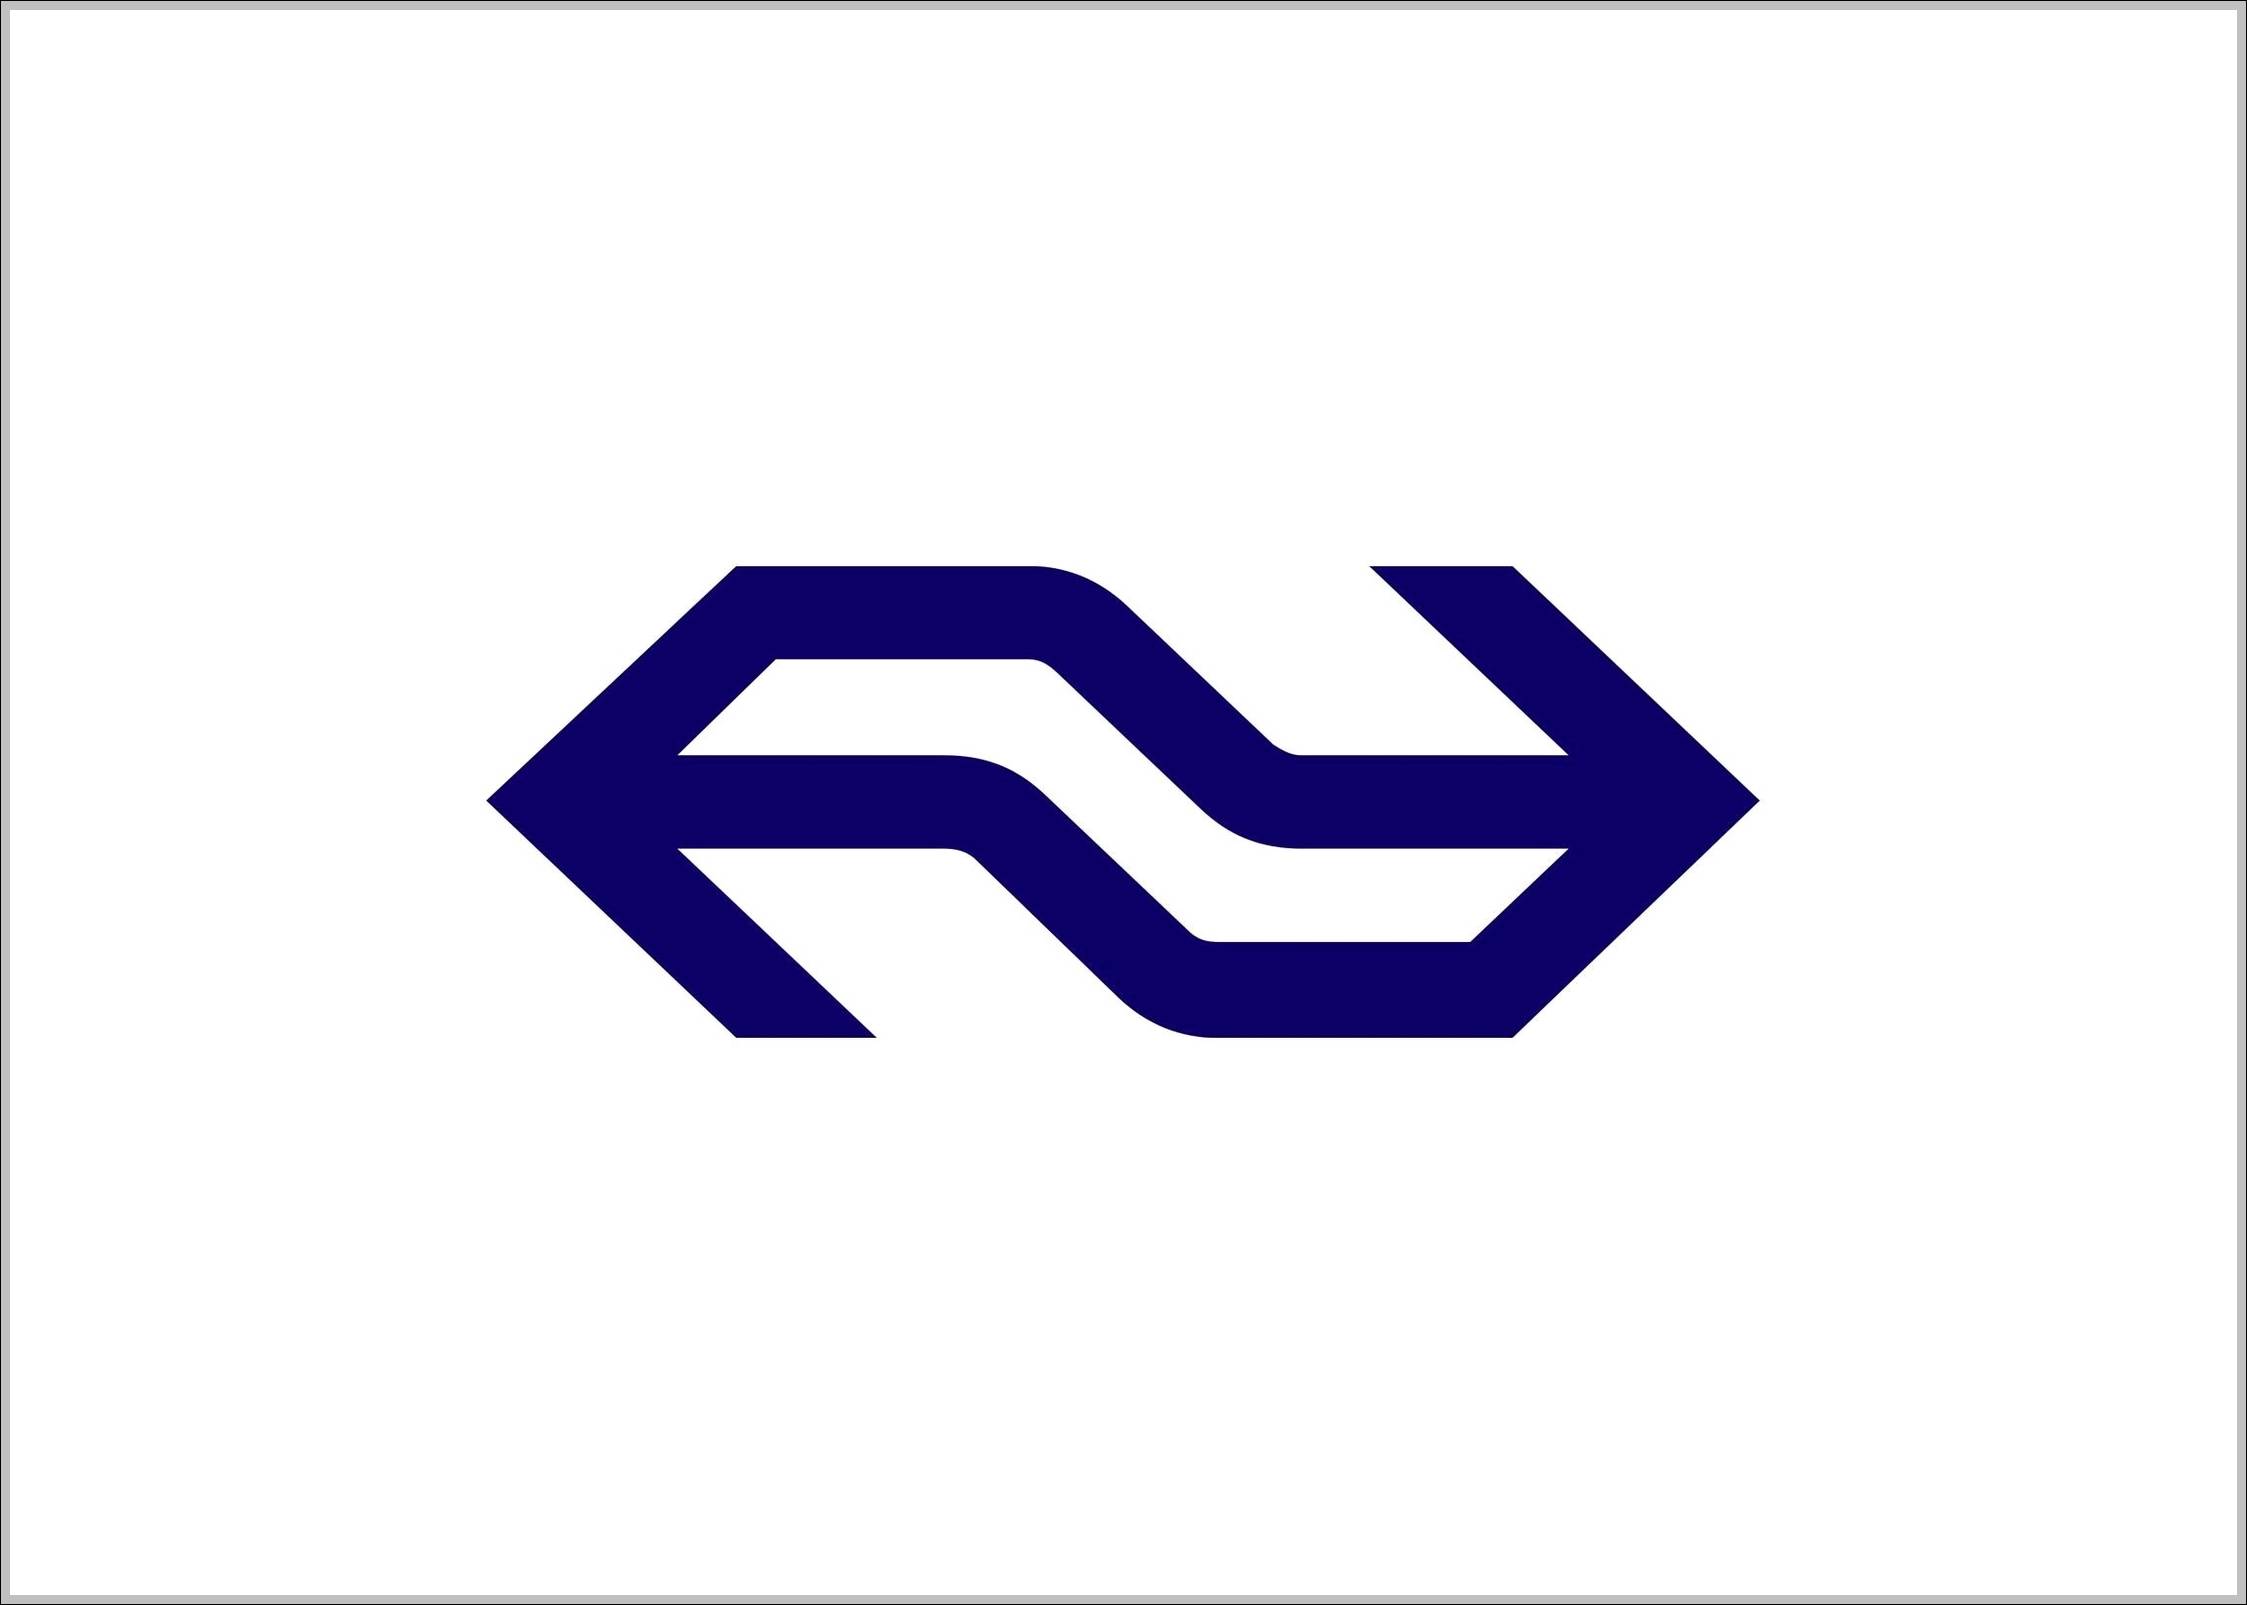 Nederlandse spoorwegen NS logo